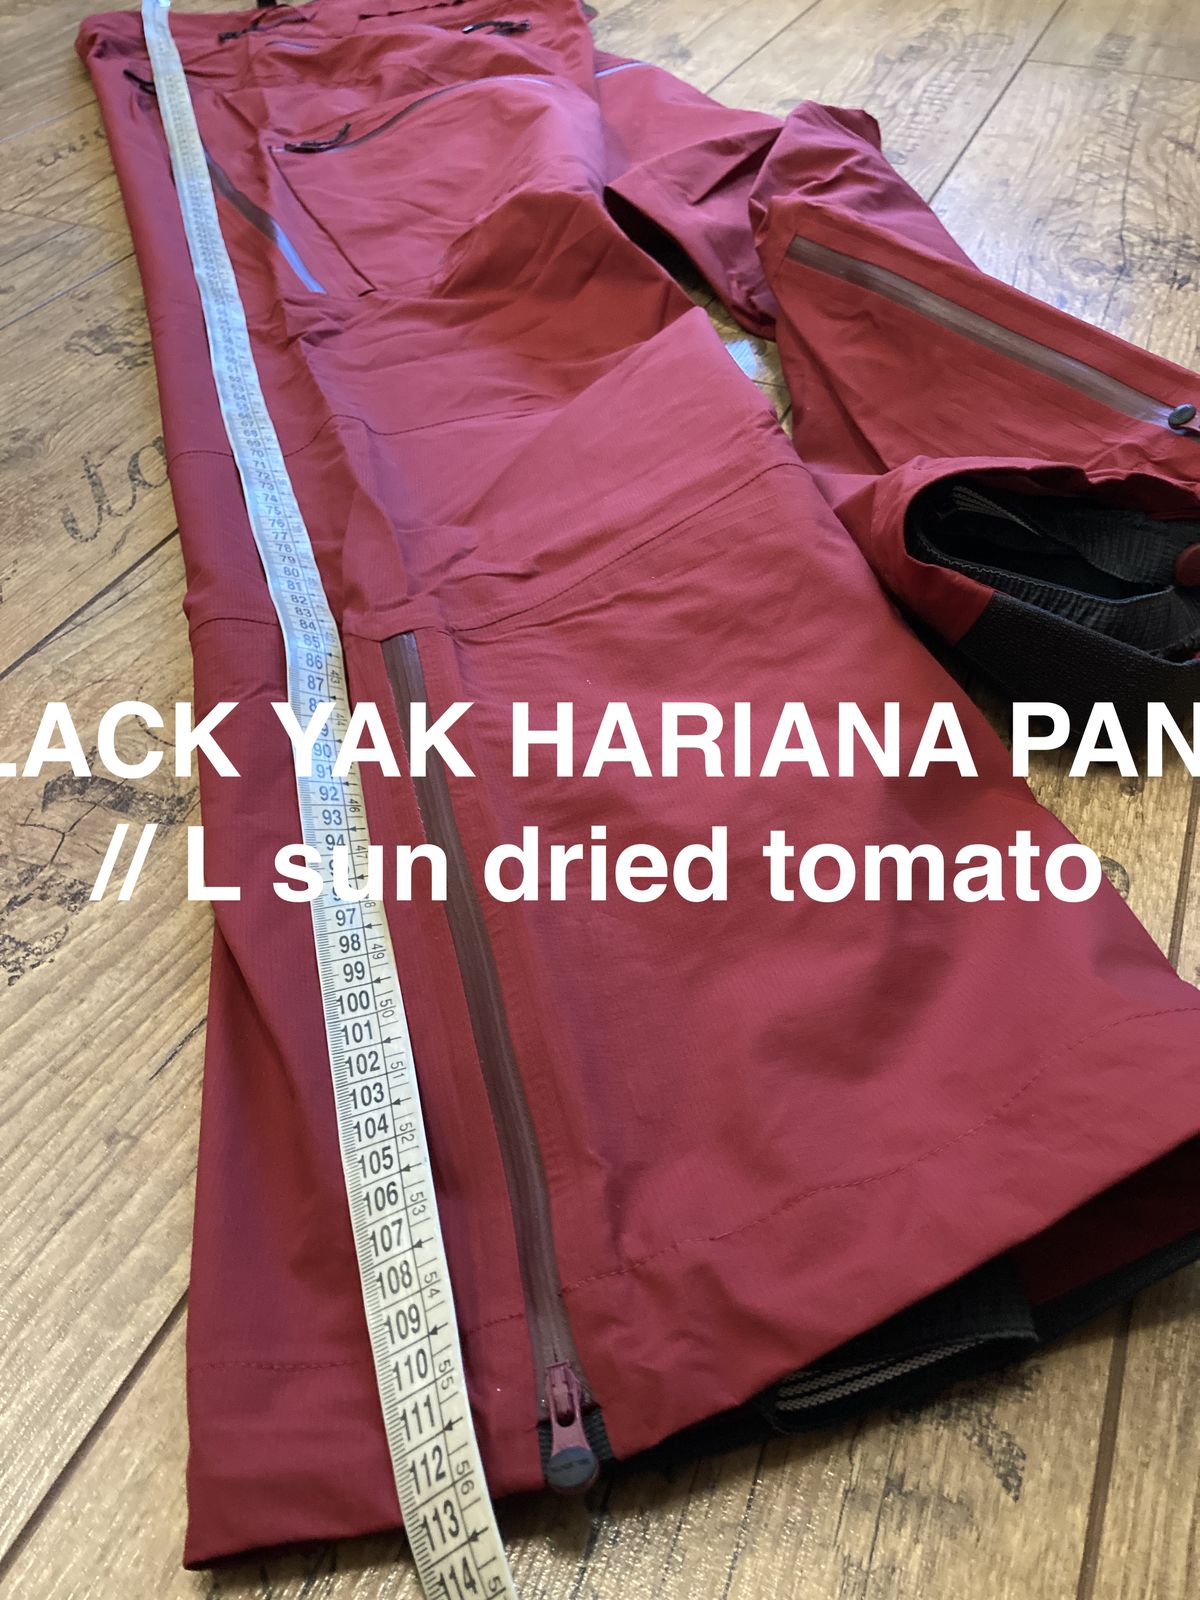 ProView  BlackYak Hariana Jacket  Dirtbag Dreams  Gear Reviews